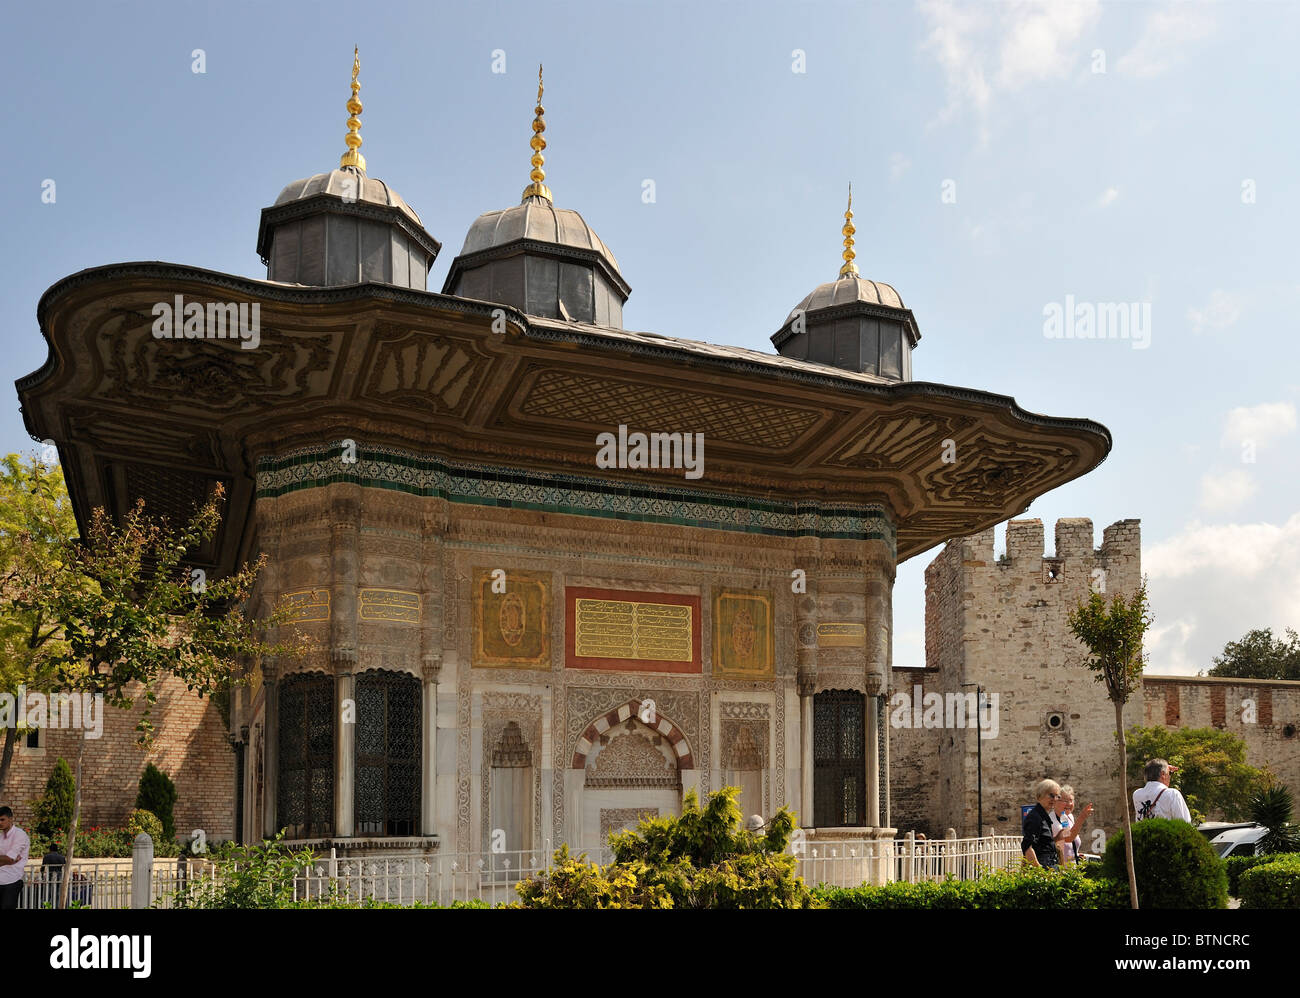 Fountain of Ahmet III, İstanbul, Turkey 100917 36374 Stock Photo